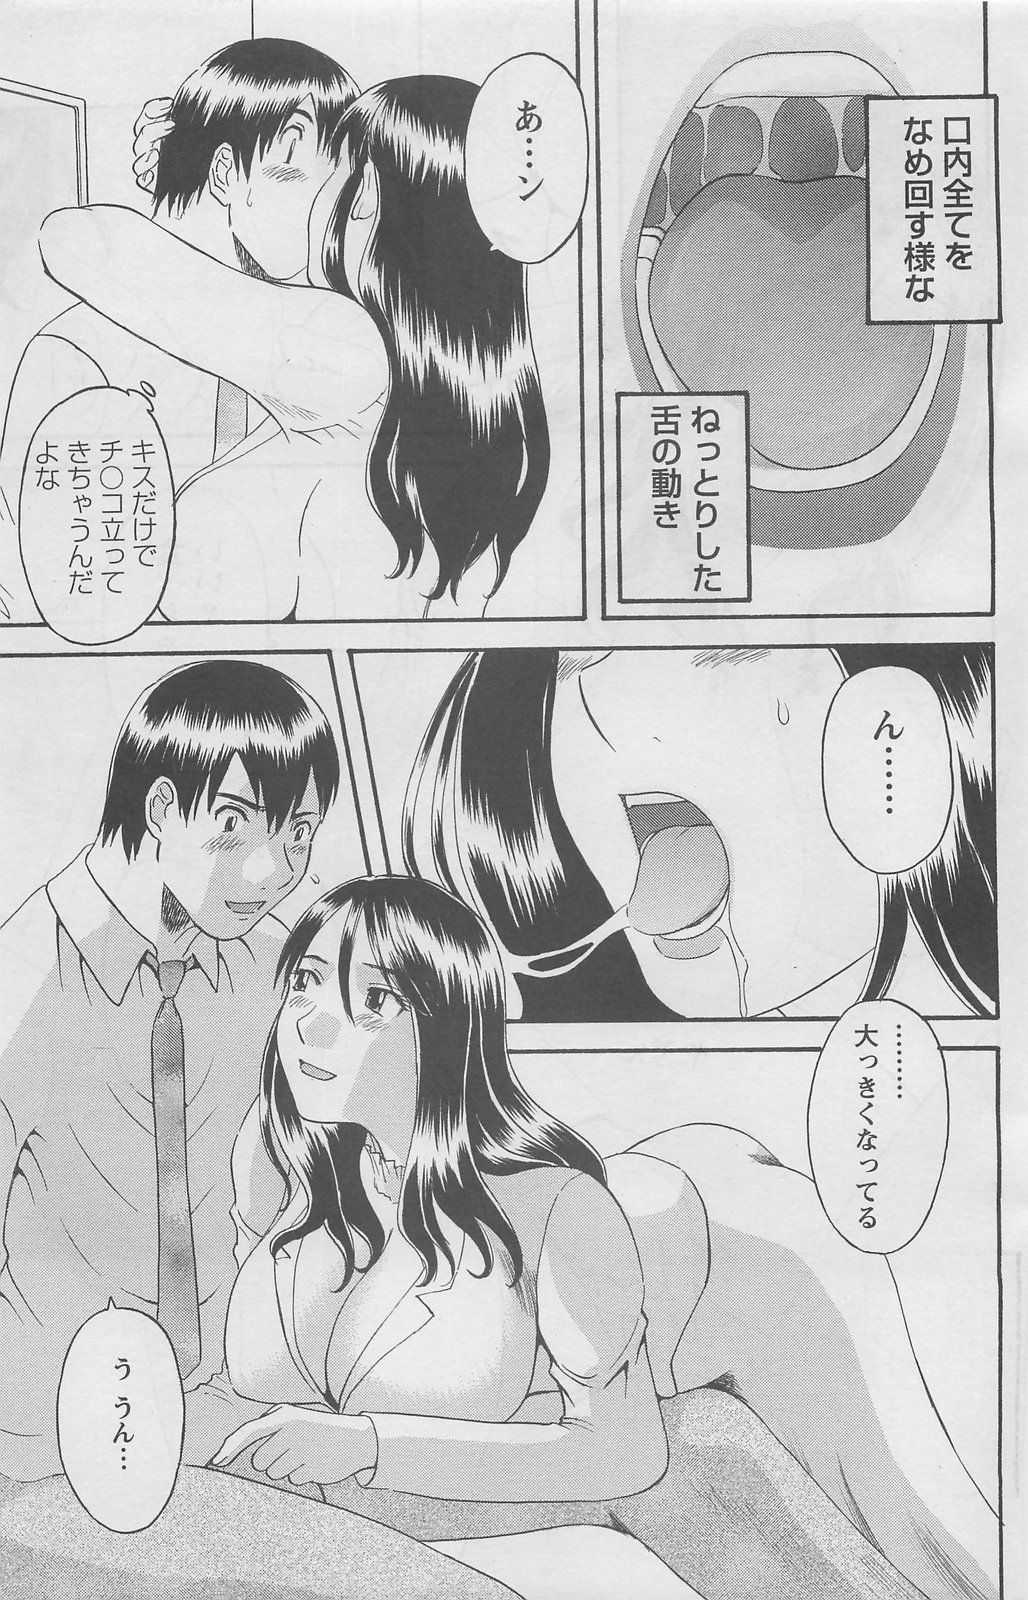 (Adult Manga) [Magazine] Pizazz DX 2008-05 